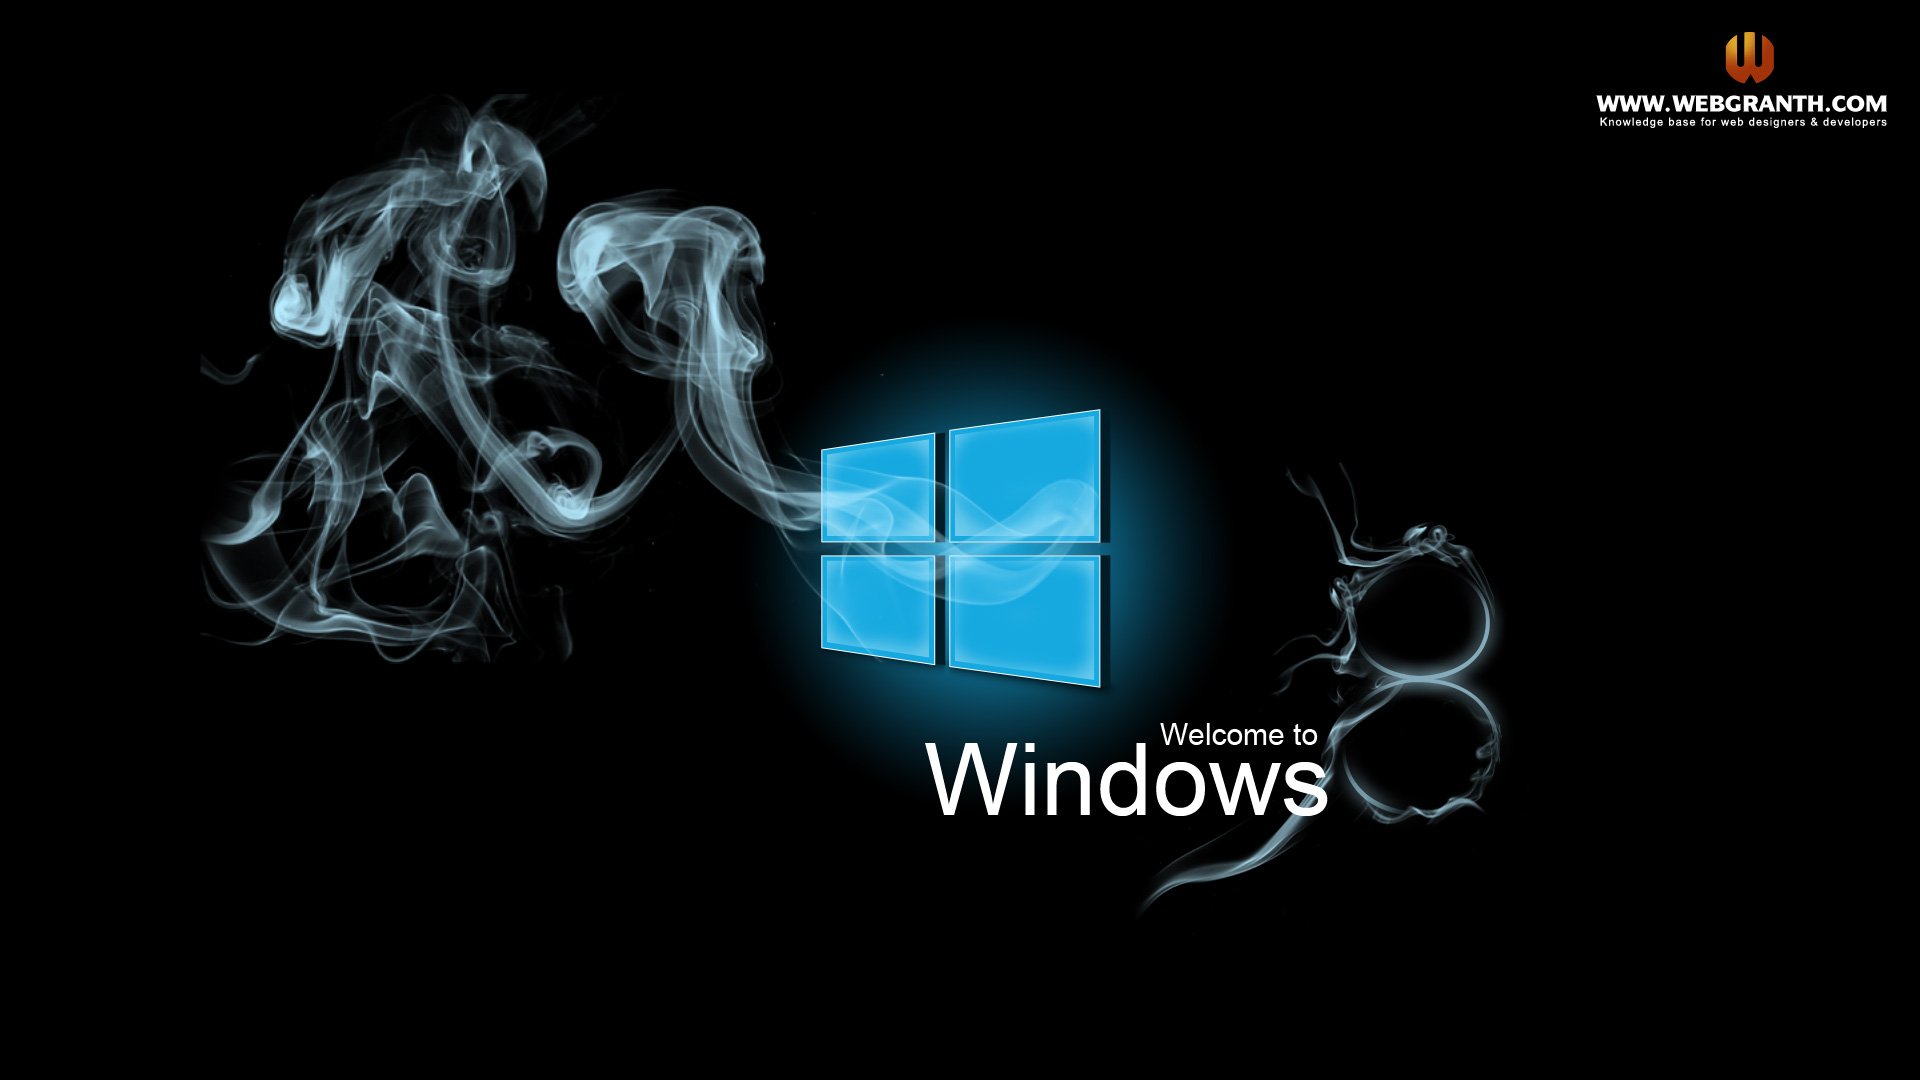 Windows 8 wallpaper   1134662 1920x1080